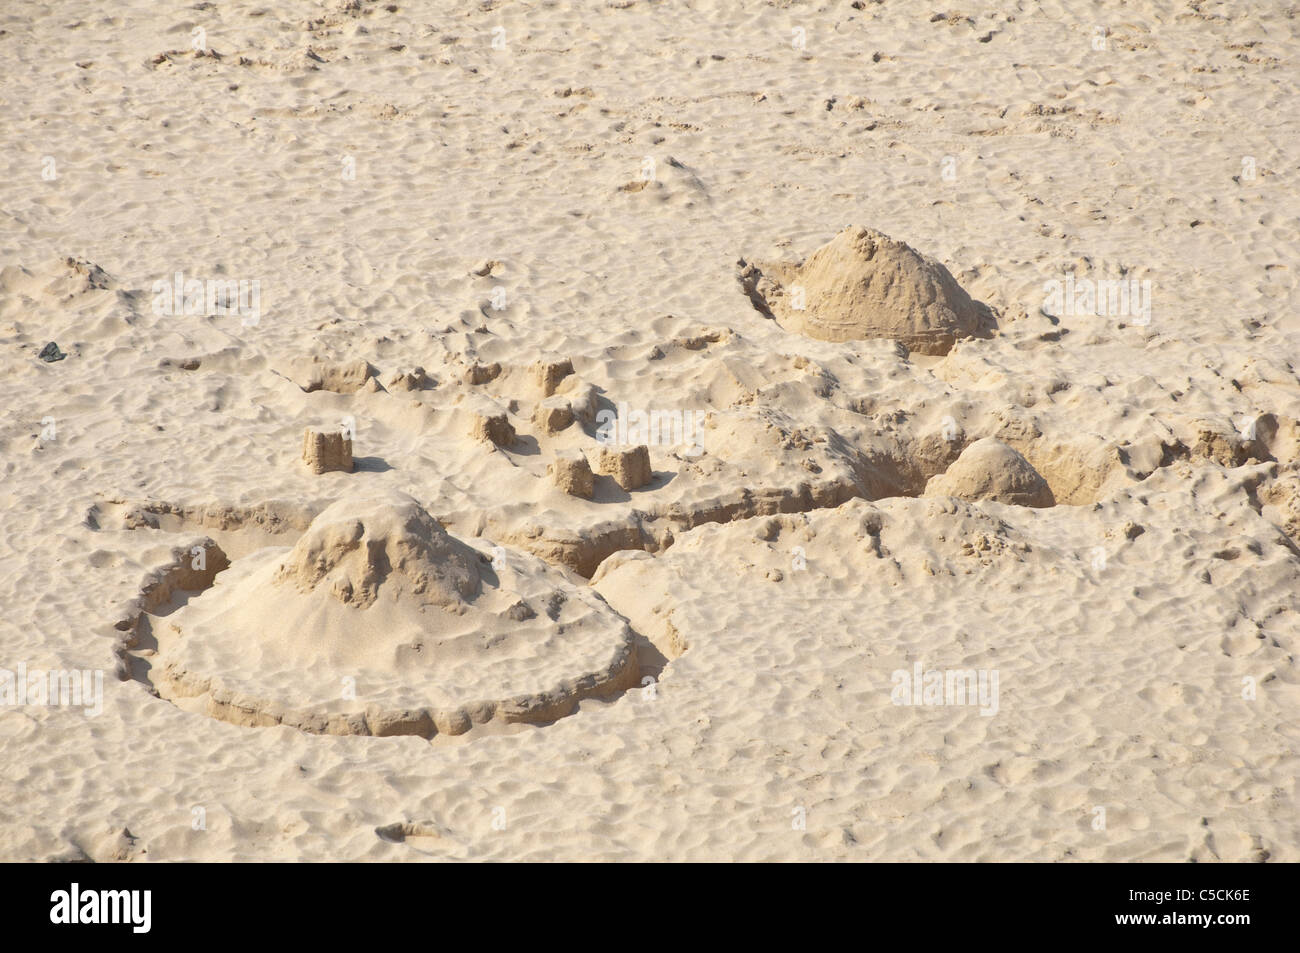 Sandcastles on a sandy beach, Cornwall, UK. Stock Photo